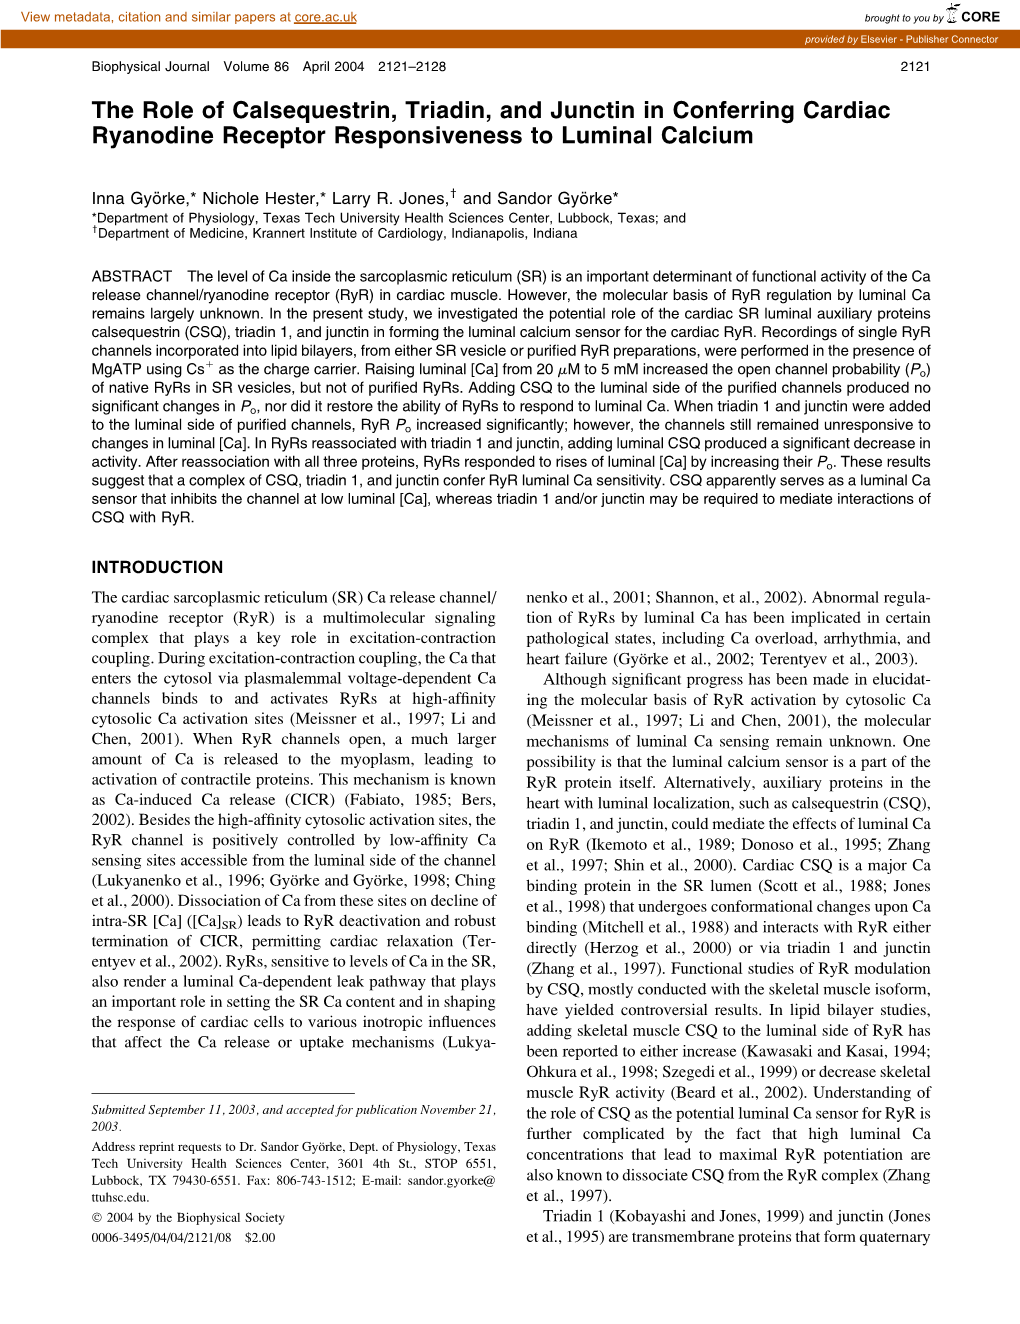 The Role of Calsequestrin, Triadin, and Junctin in Conferring Cardiac Ryanodine Receptor Responsiveness to Luminal Calcium